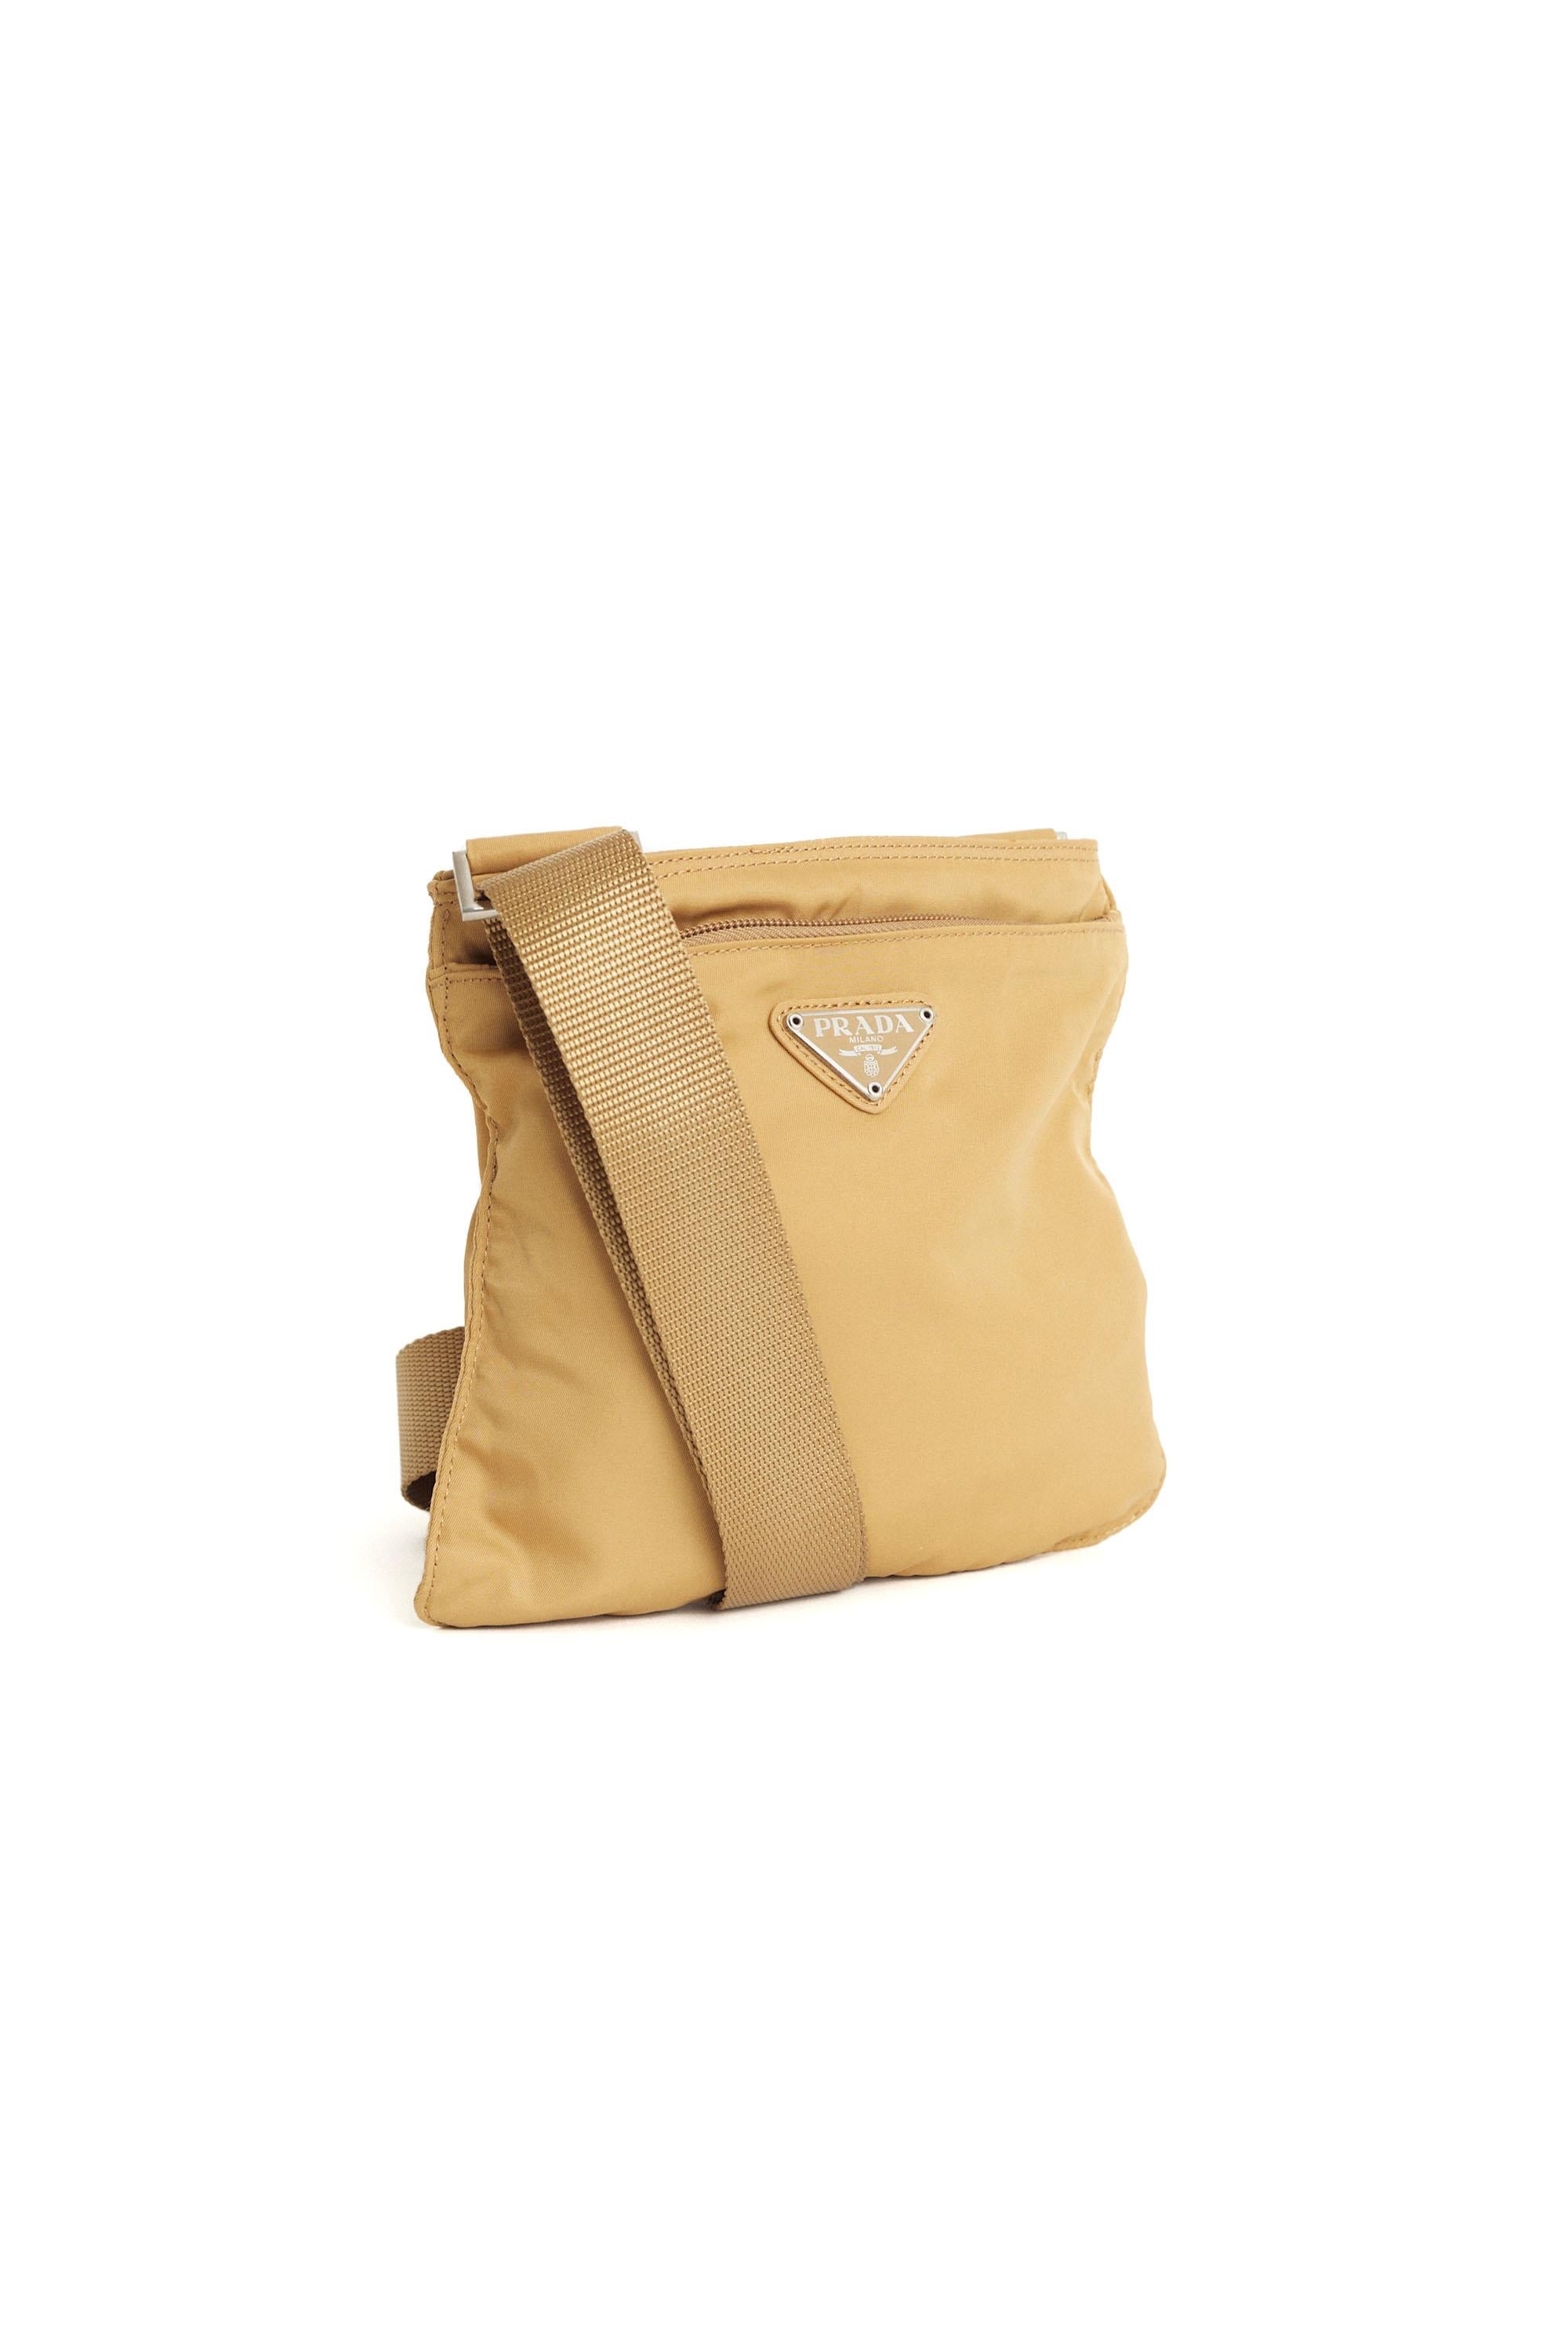 Prada  Tessuto Nylon Camel Crossbody Bag In Excellent Condition In London, GB